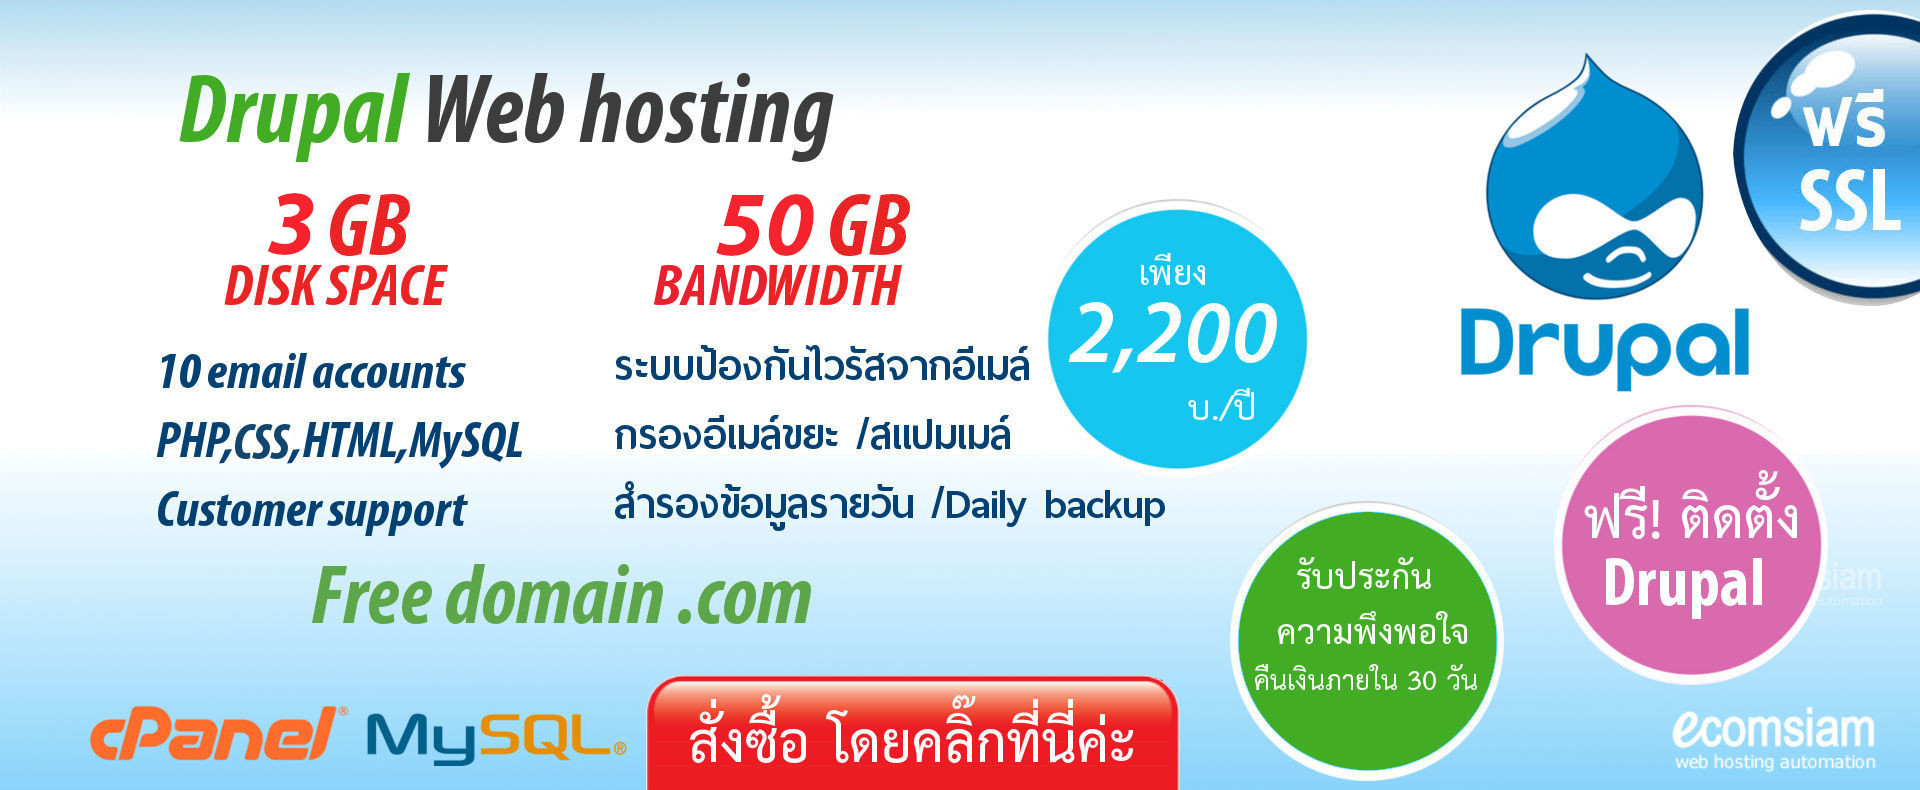 web hosting thai เว็บโฮสติ้งไทย ฟรีโดเมนเนม ฟรี SSL- drupal web hosting thailand free domain-drupal web hosting-banner แนะนำเว็บโฮสติ้ง บริการลูกค้า ดูแลดี โดย webhostthai.com